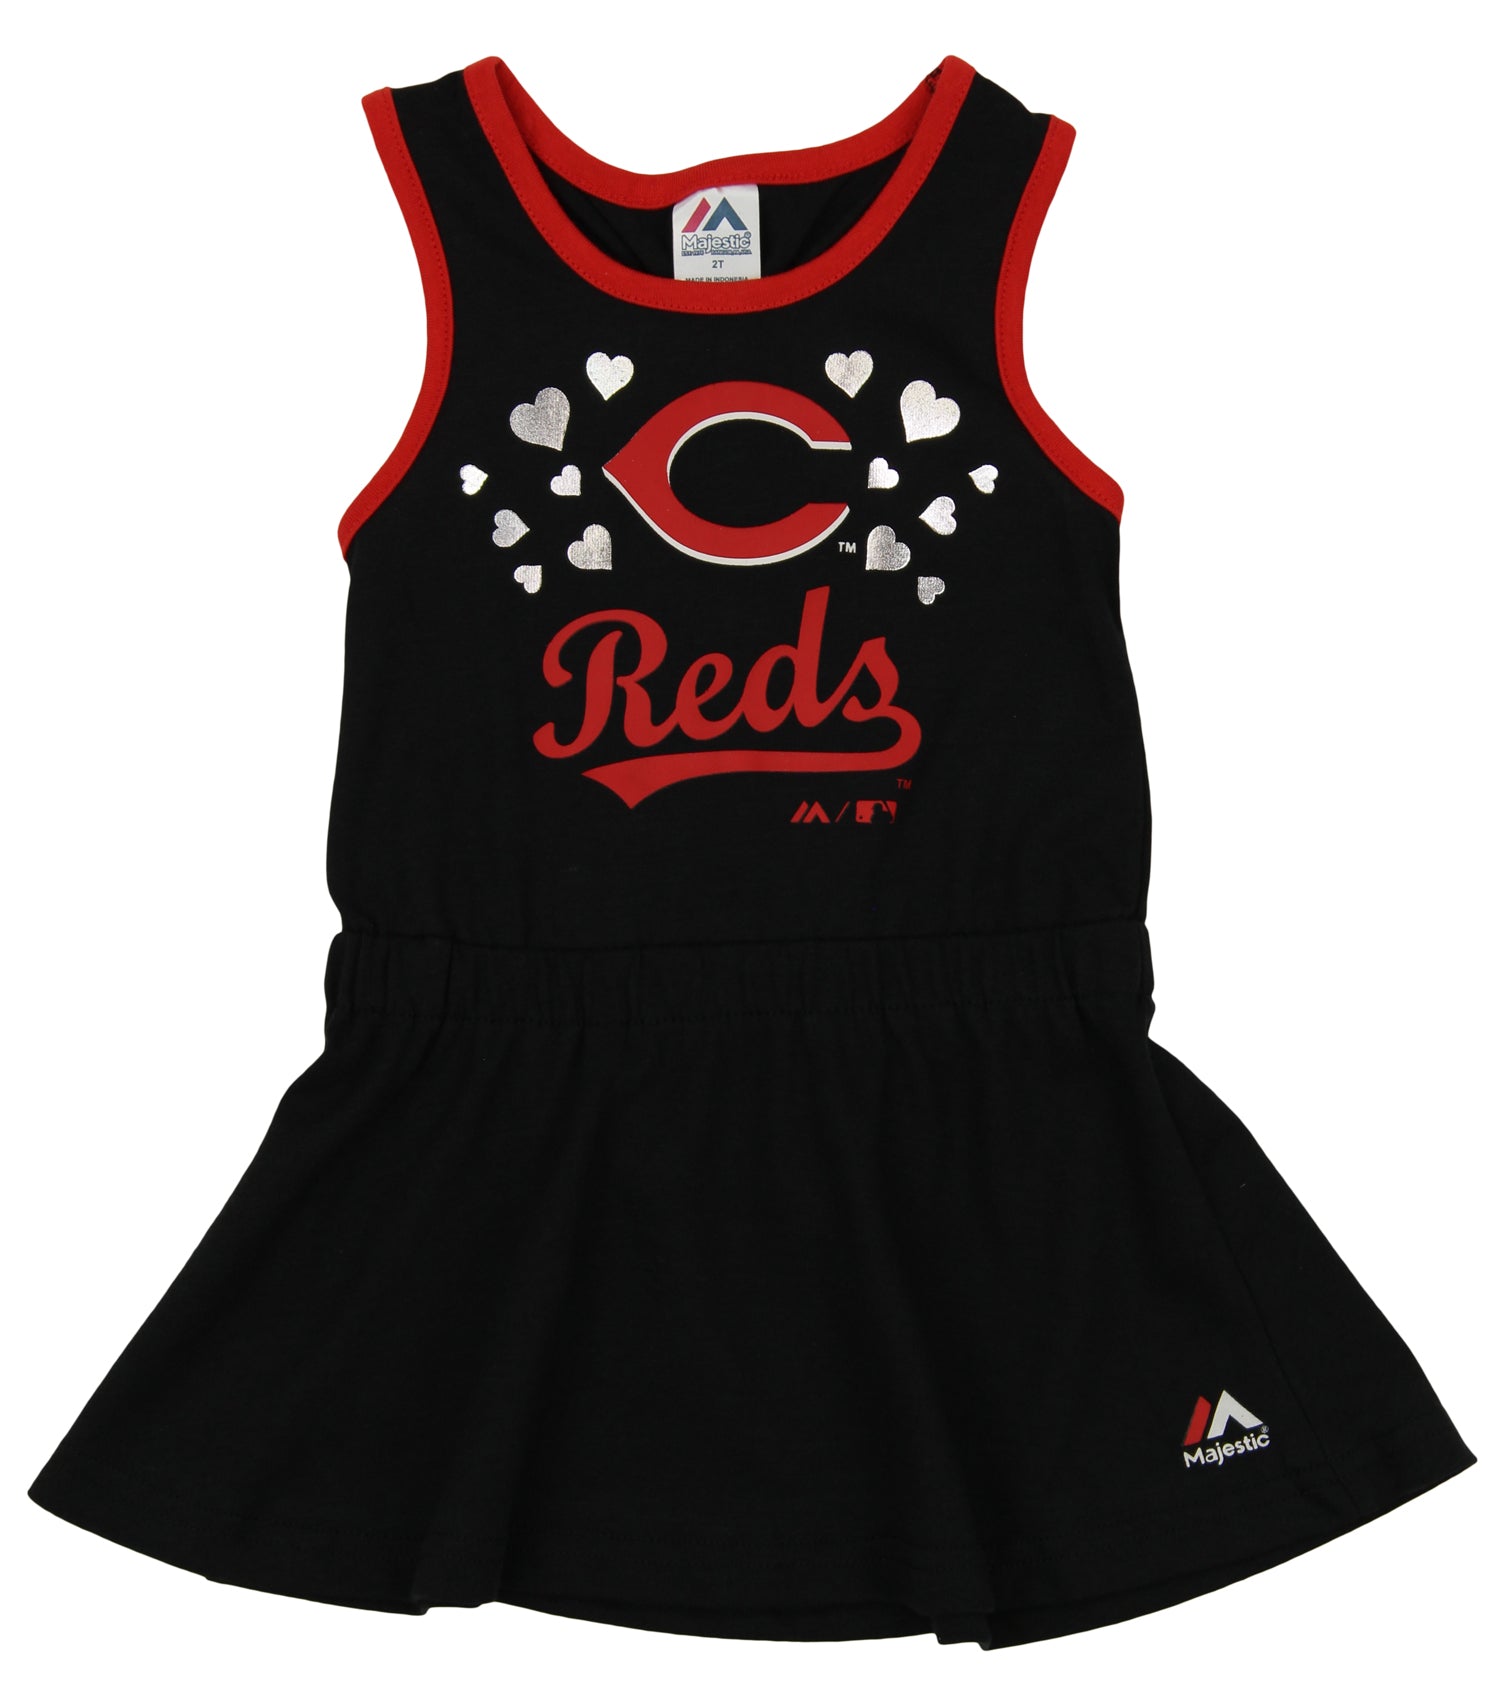 Majestic Cincinnati Reds Girls Toddler Black Criss Cross Tank Dress